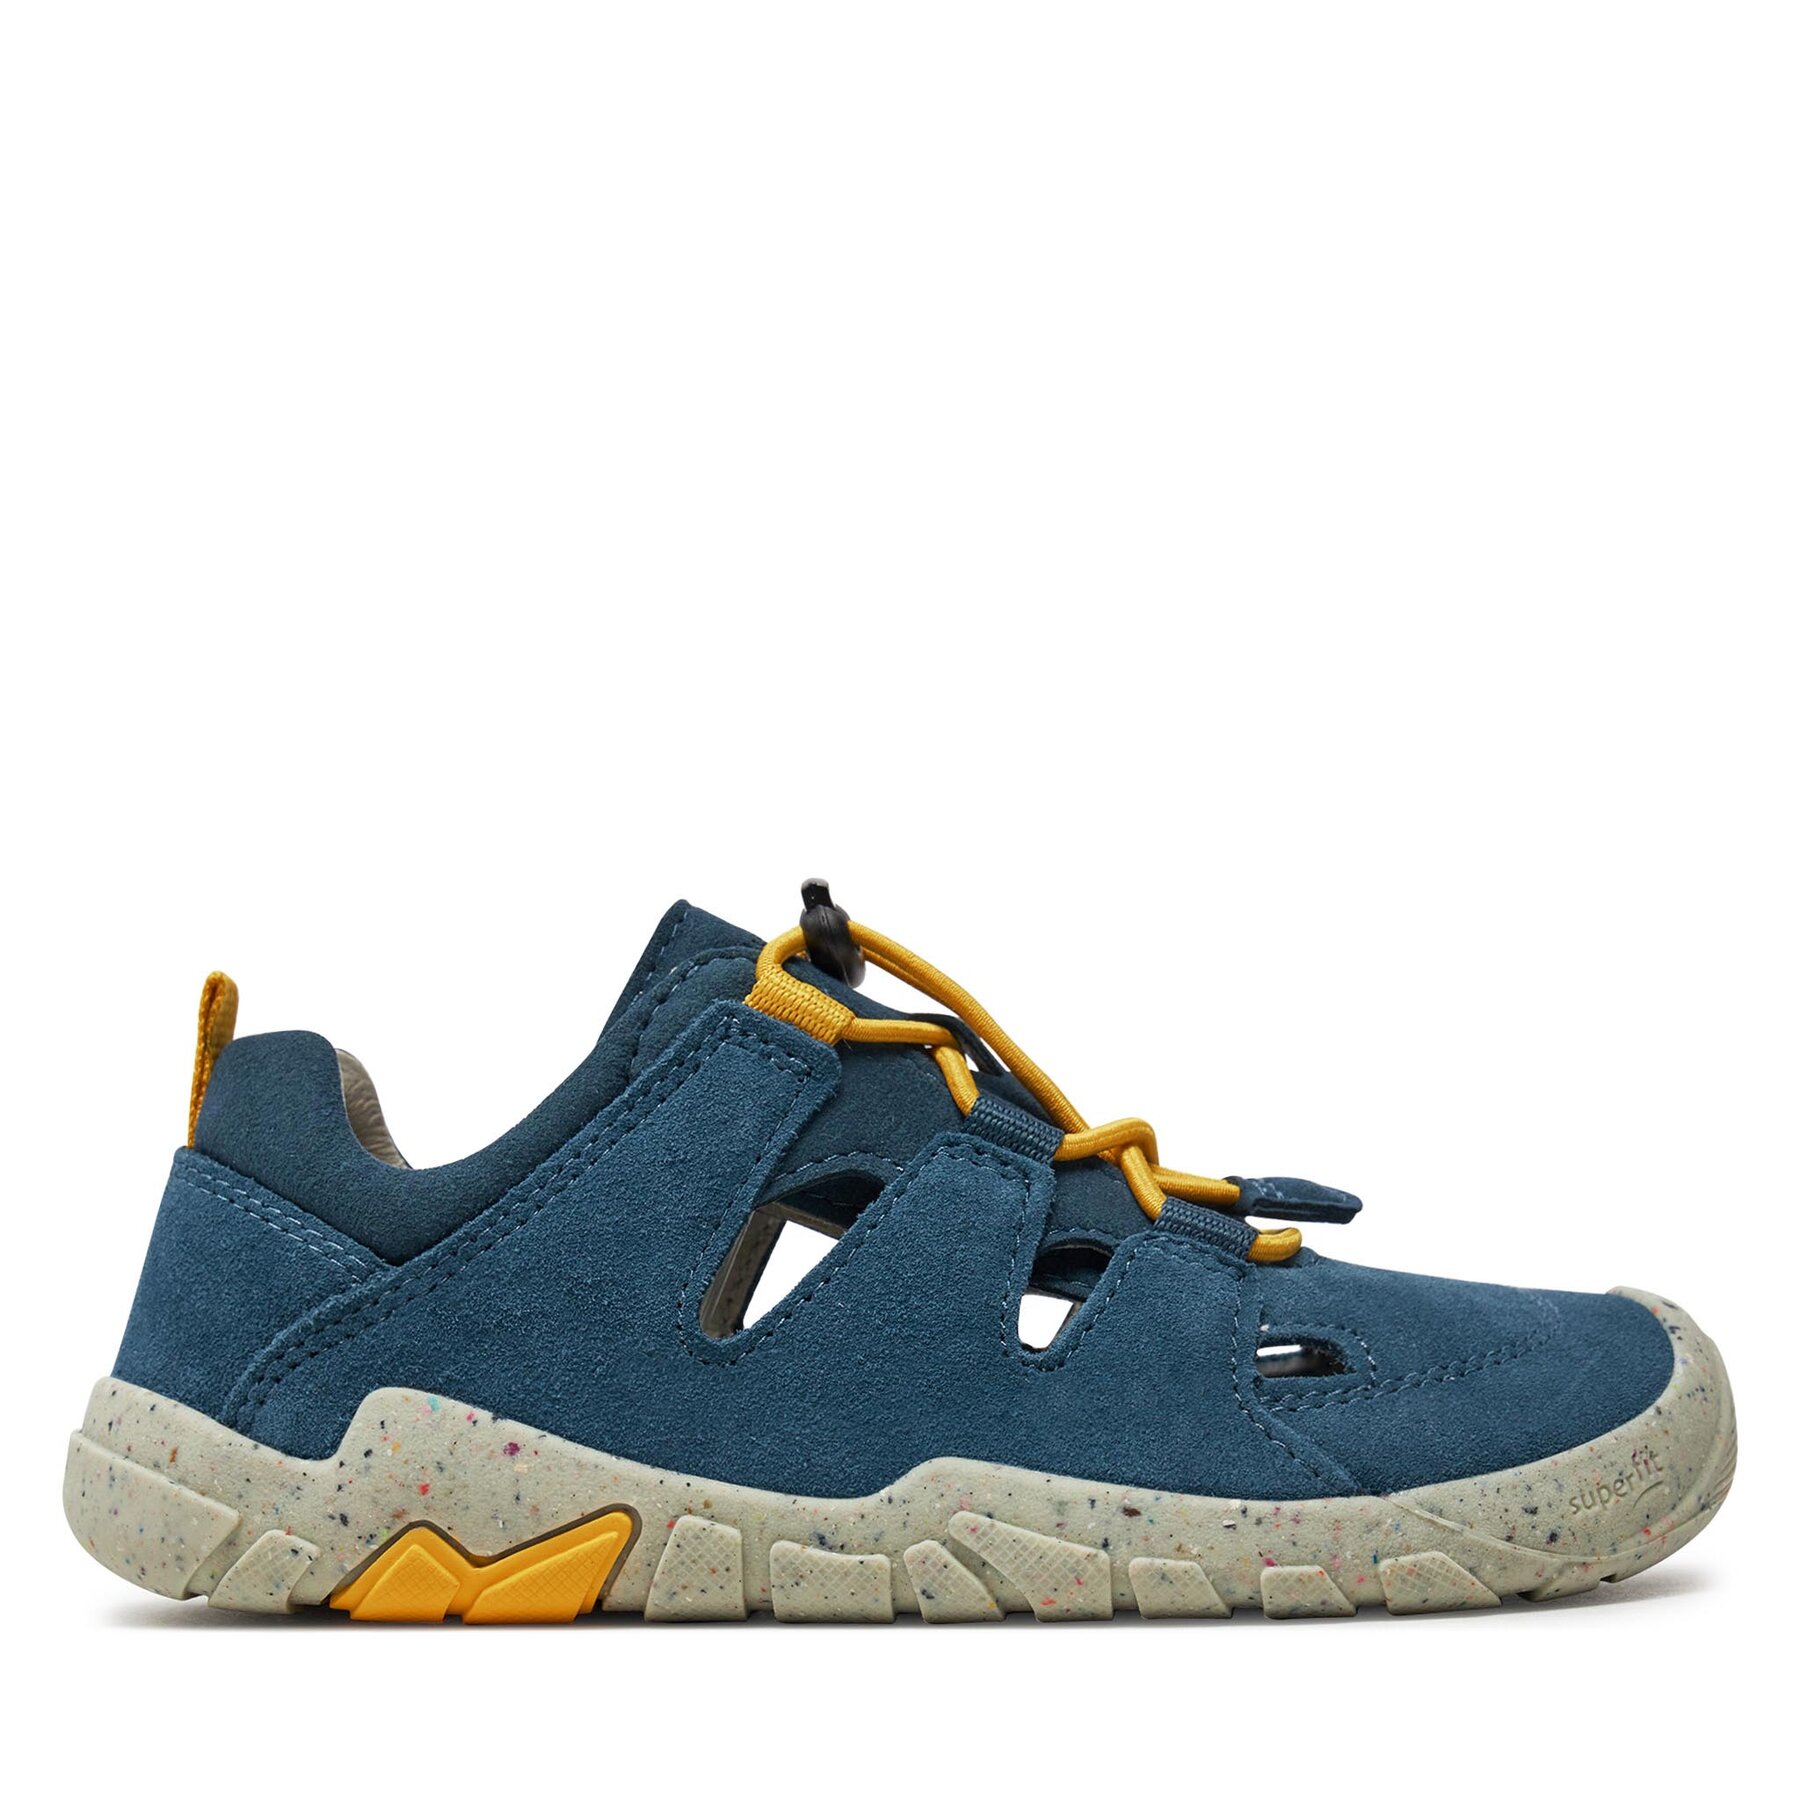 Cipele Superfit 1-006037-8000 S Blue/Yellow